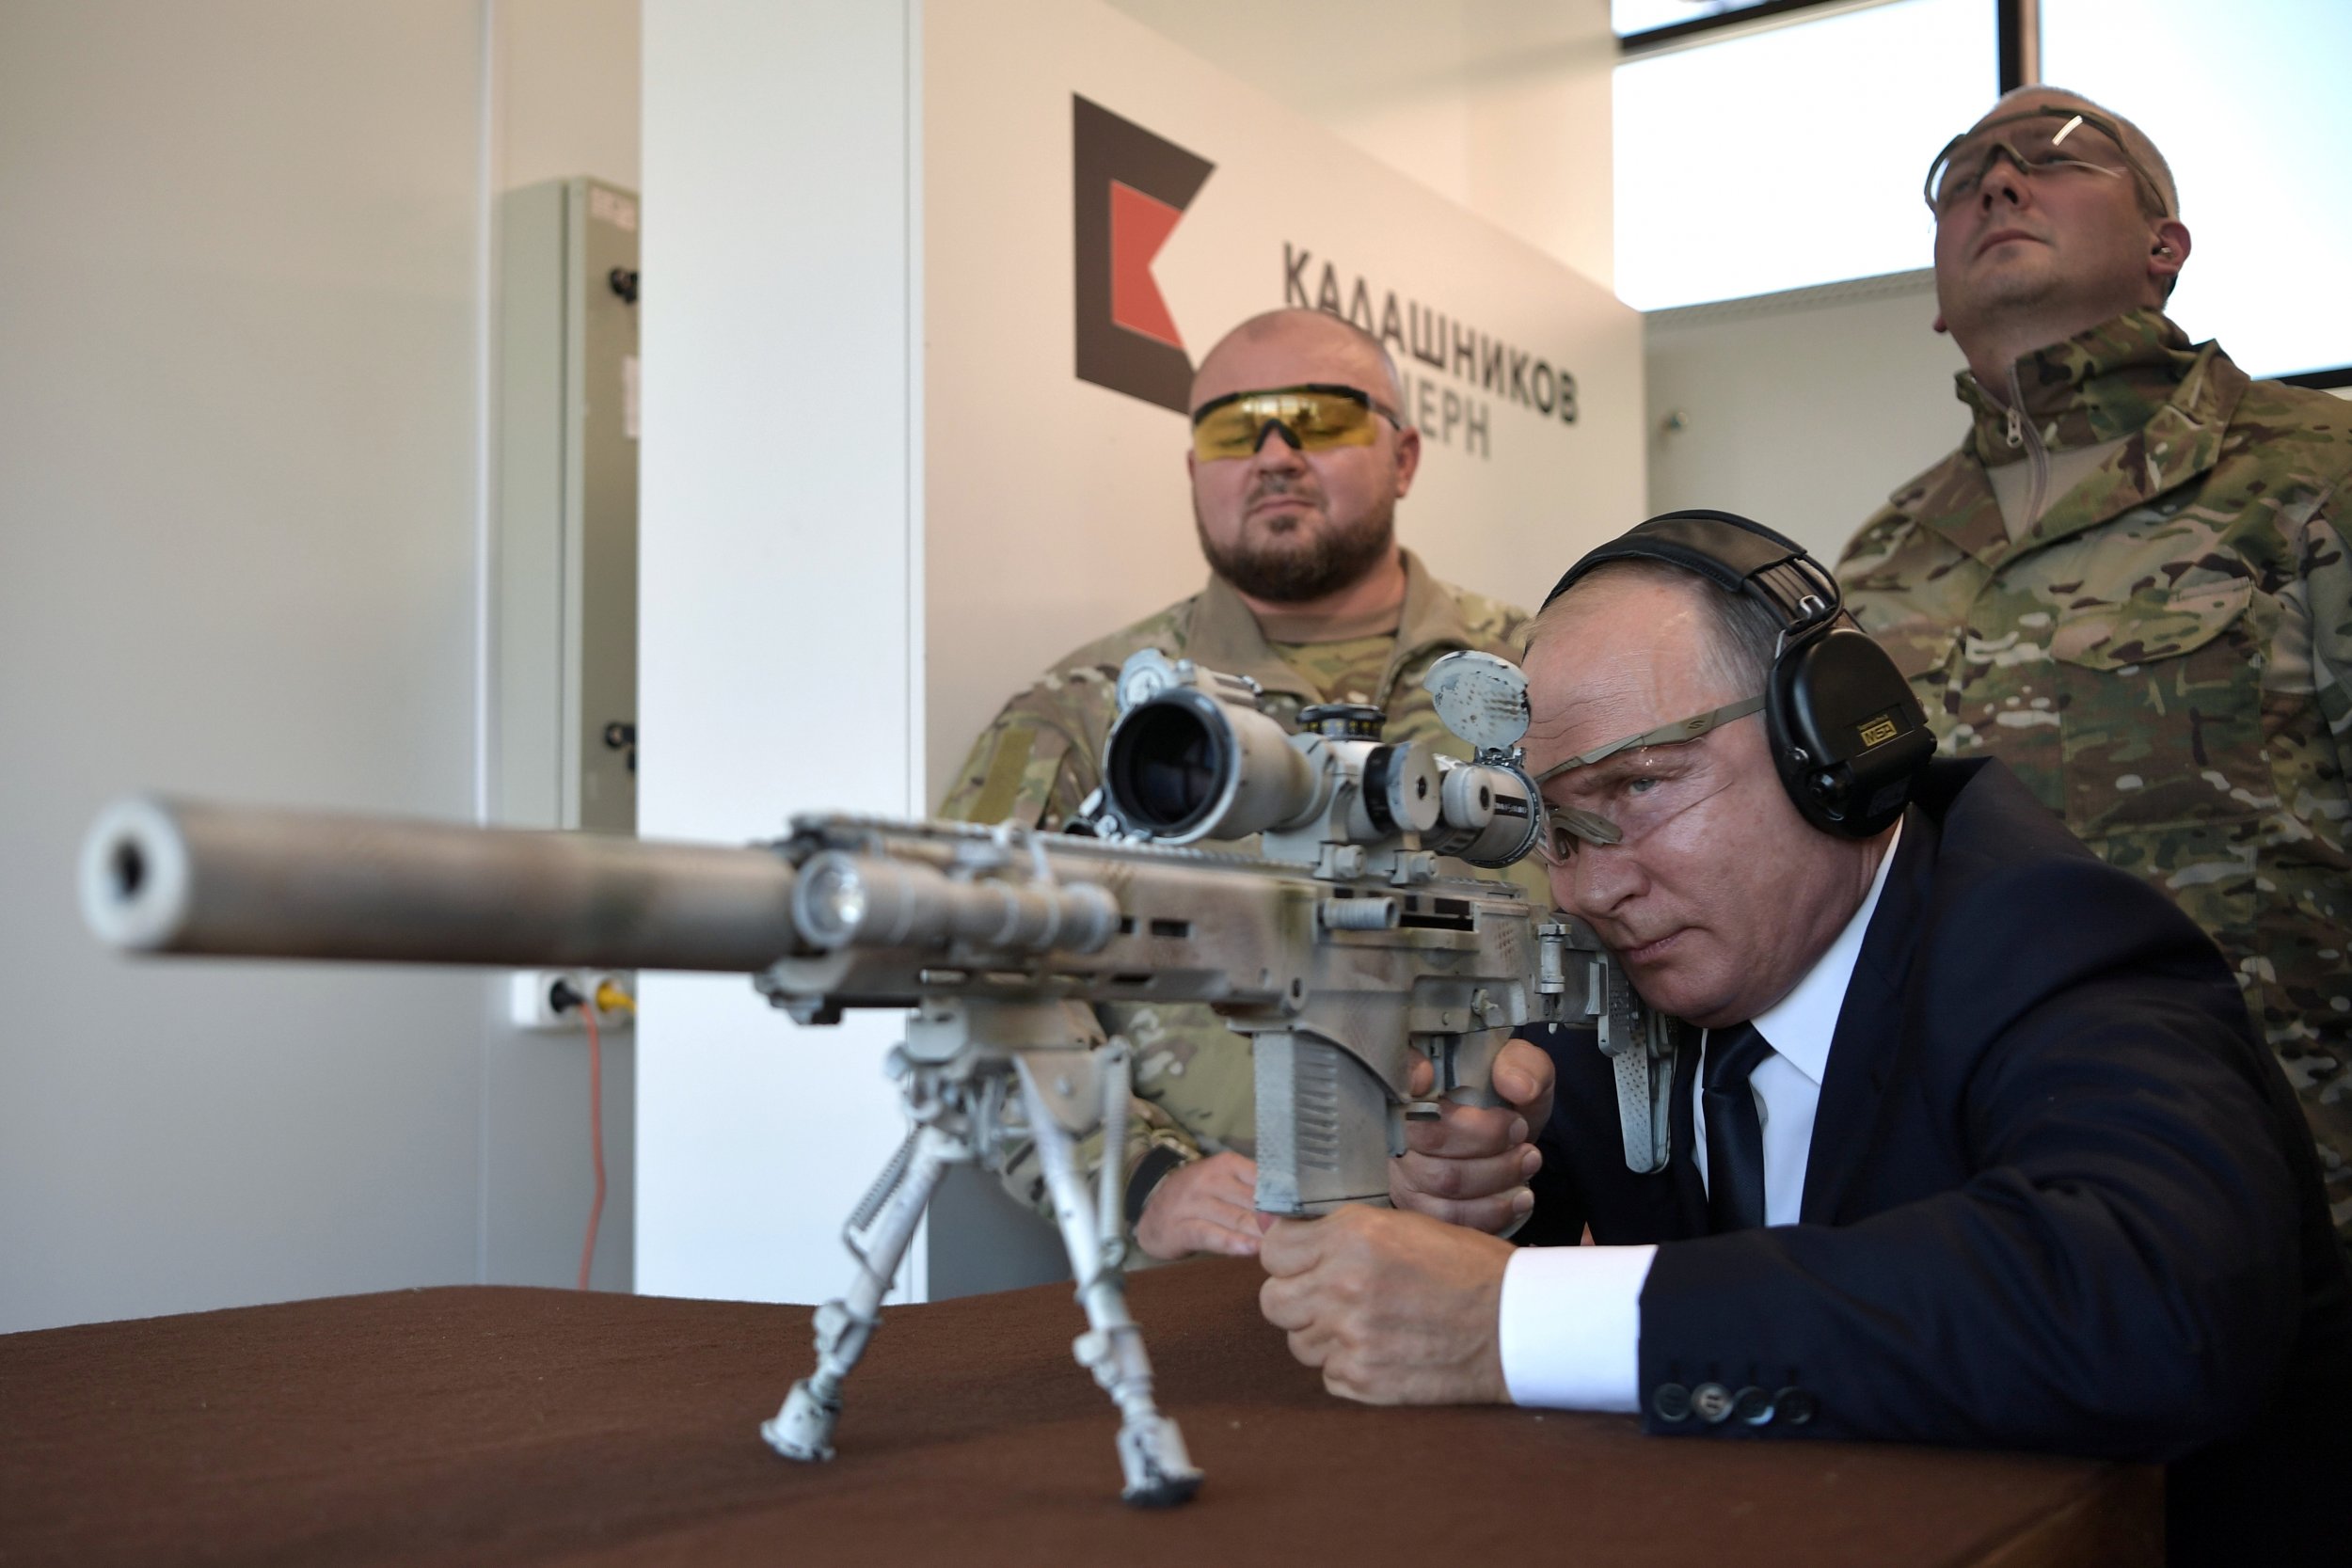 Video: Vladimir Putin fires a new Kalashnikov rifle.